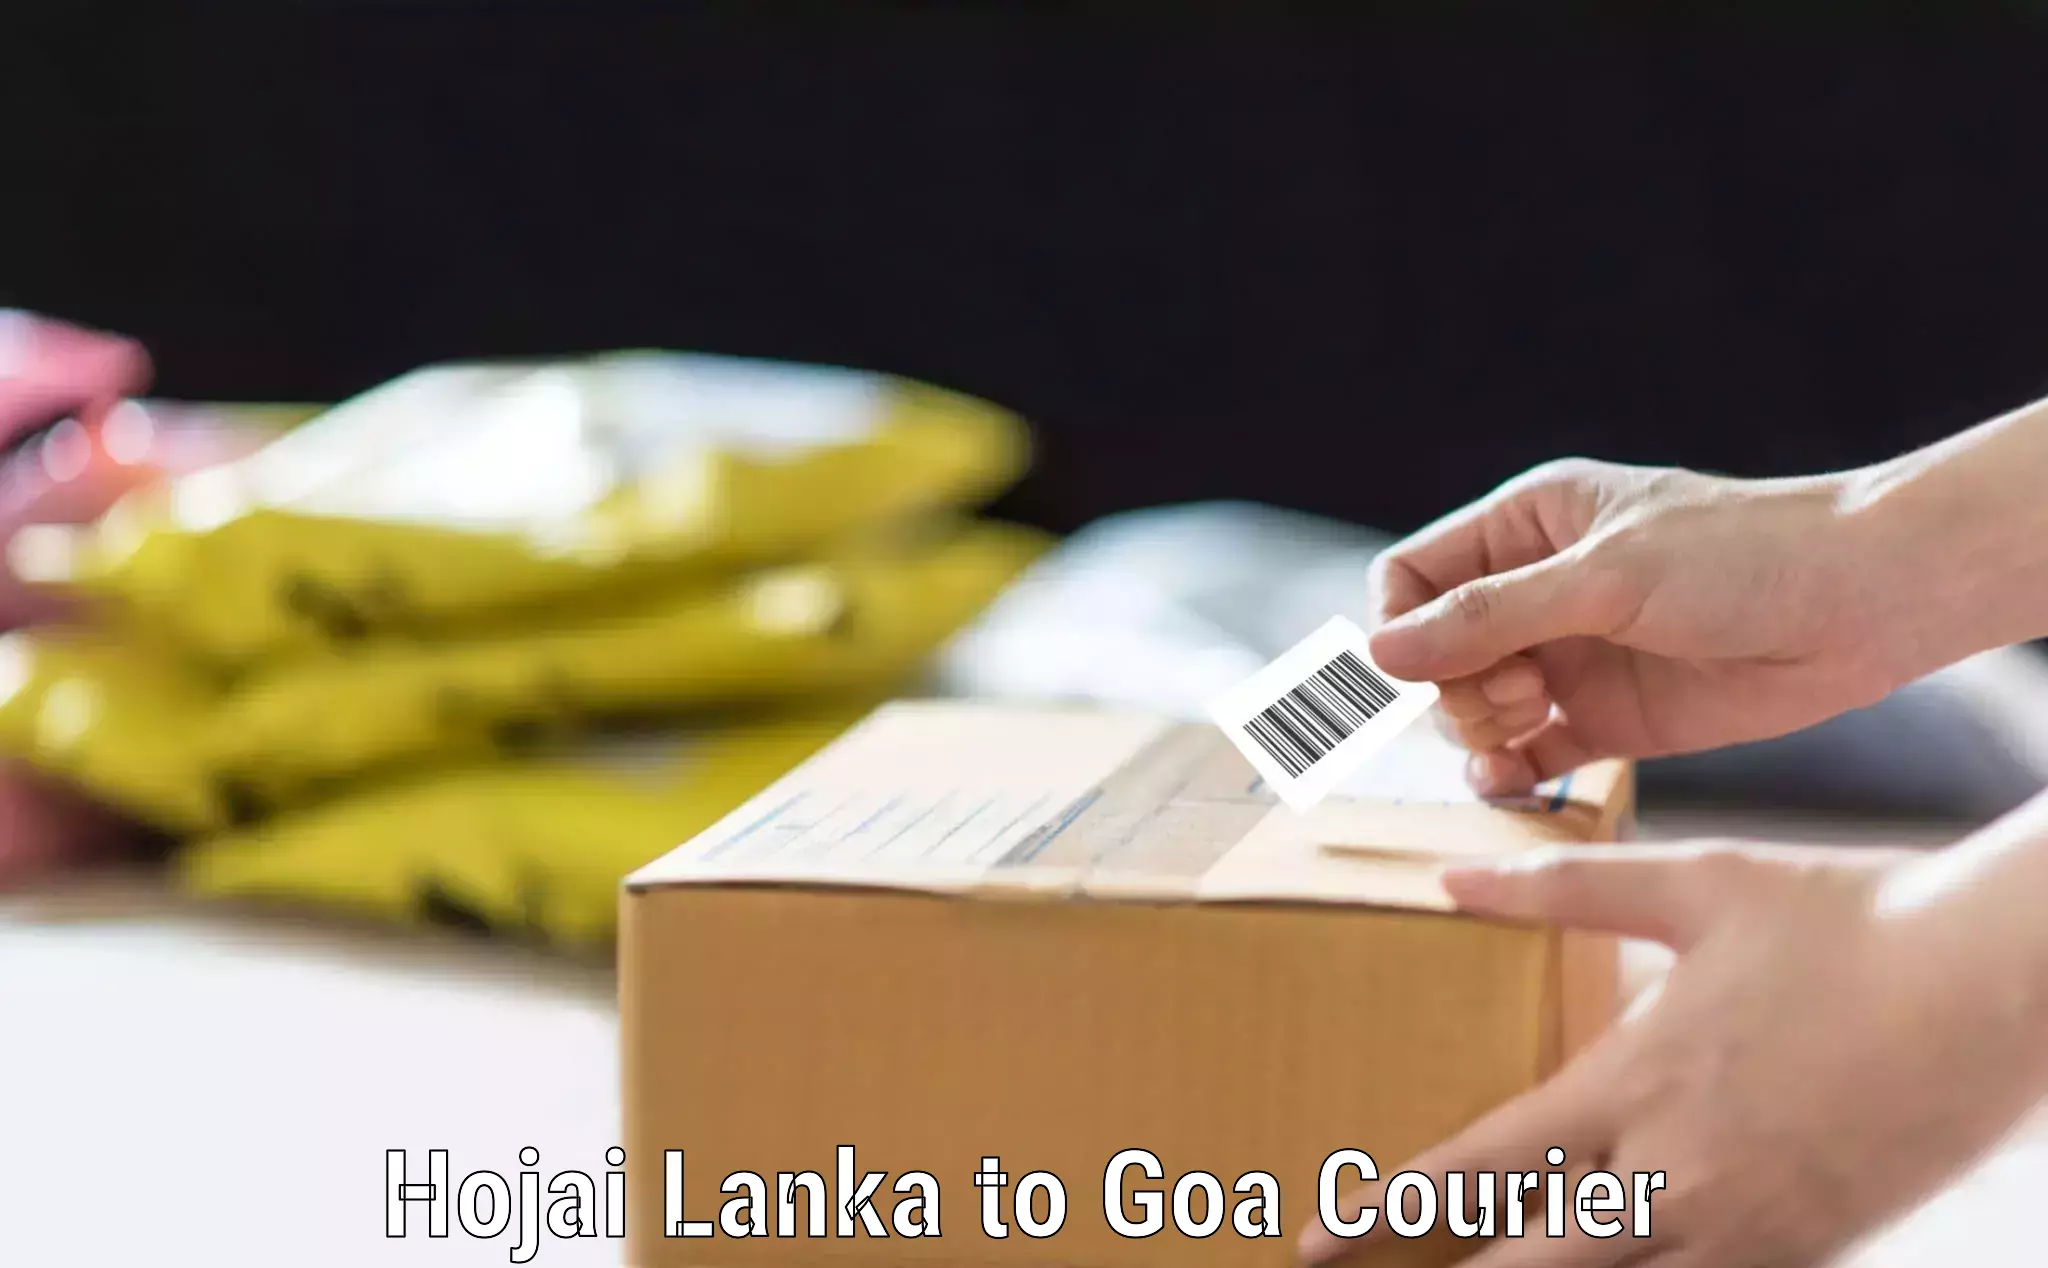 Luggage forwarding service Hojai Lanka to Goa